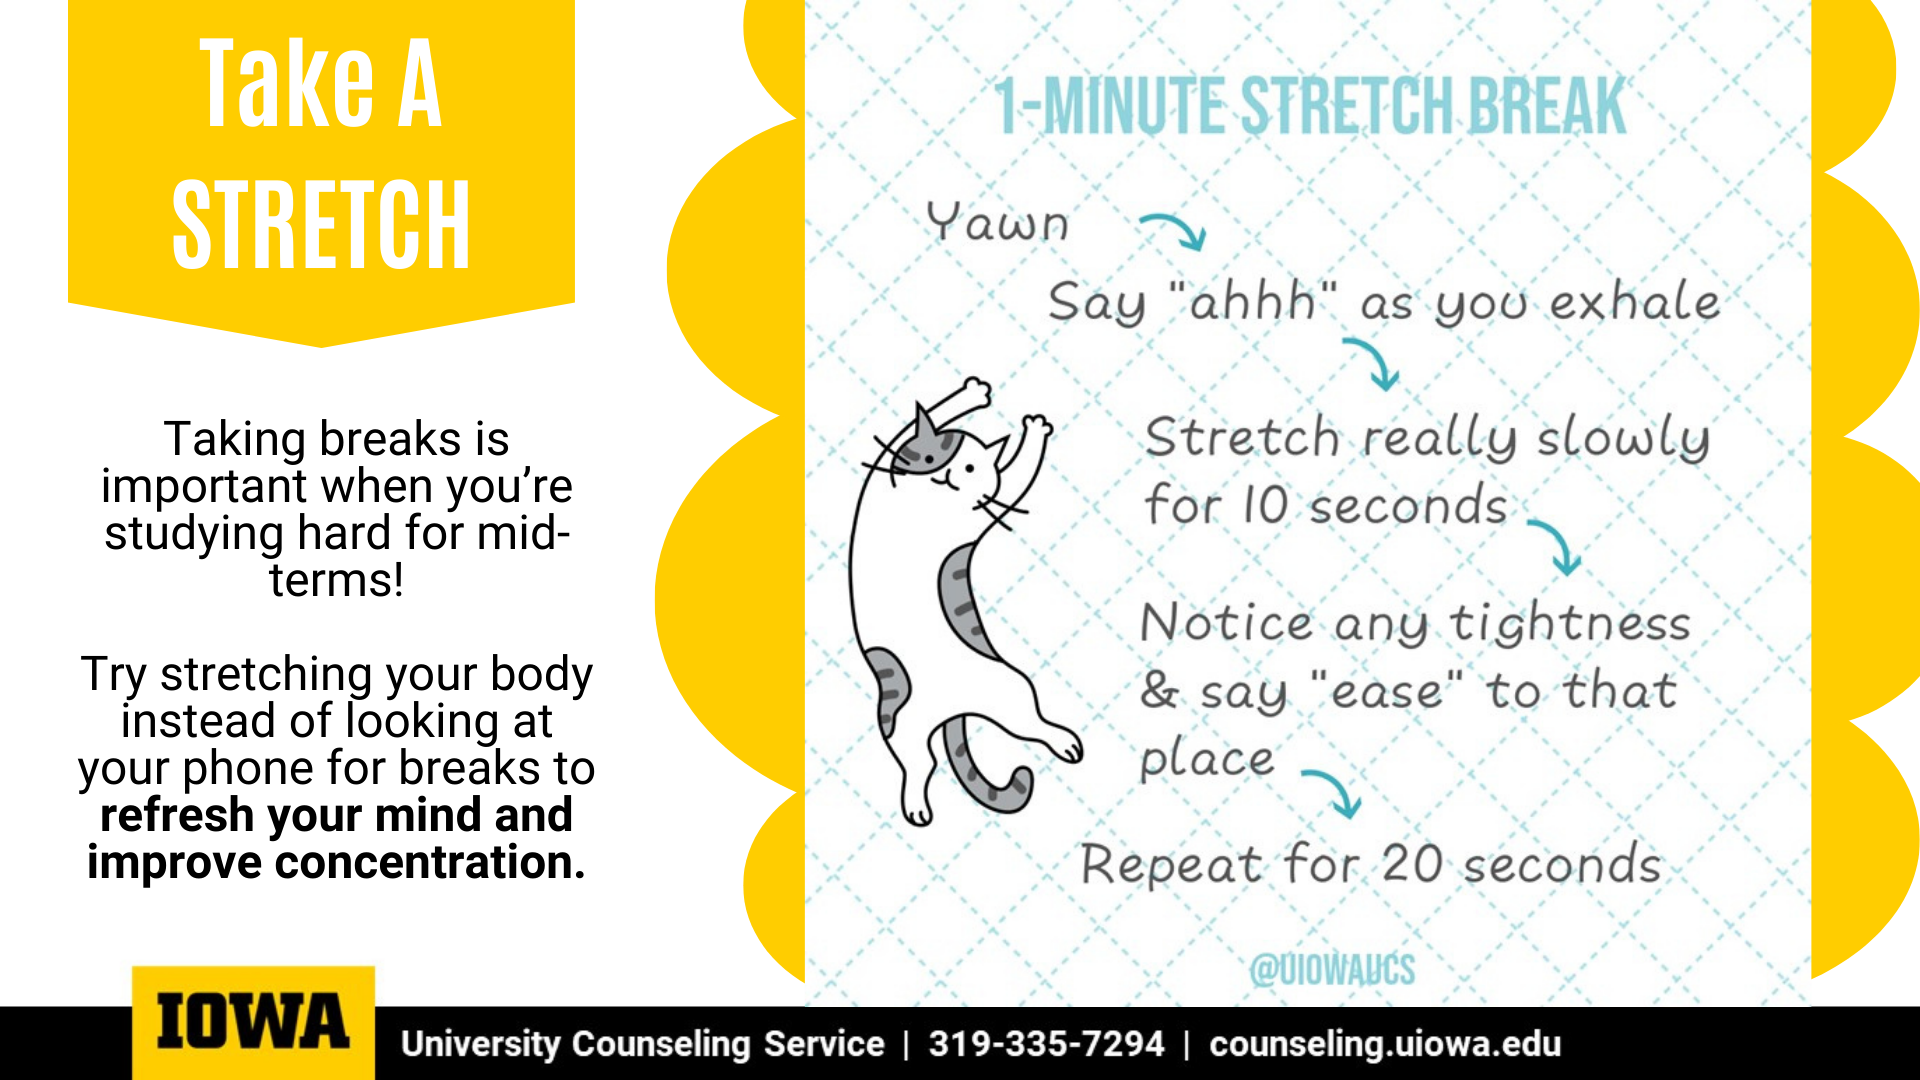 University Counseling Service - Take A Stretch